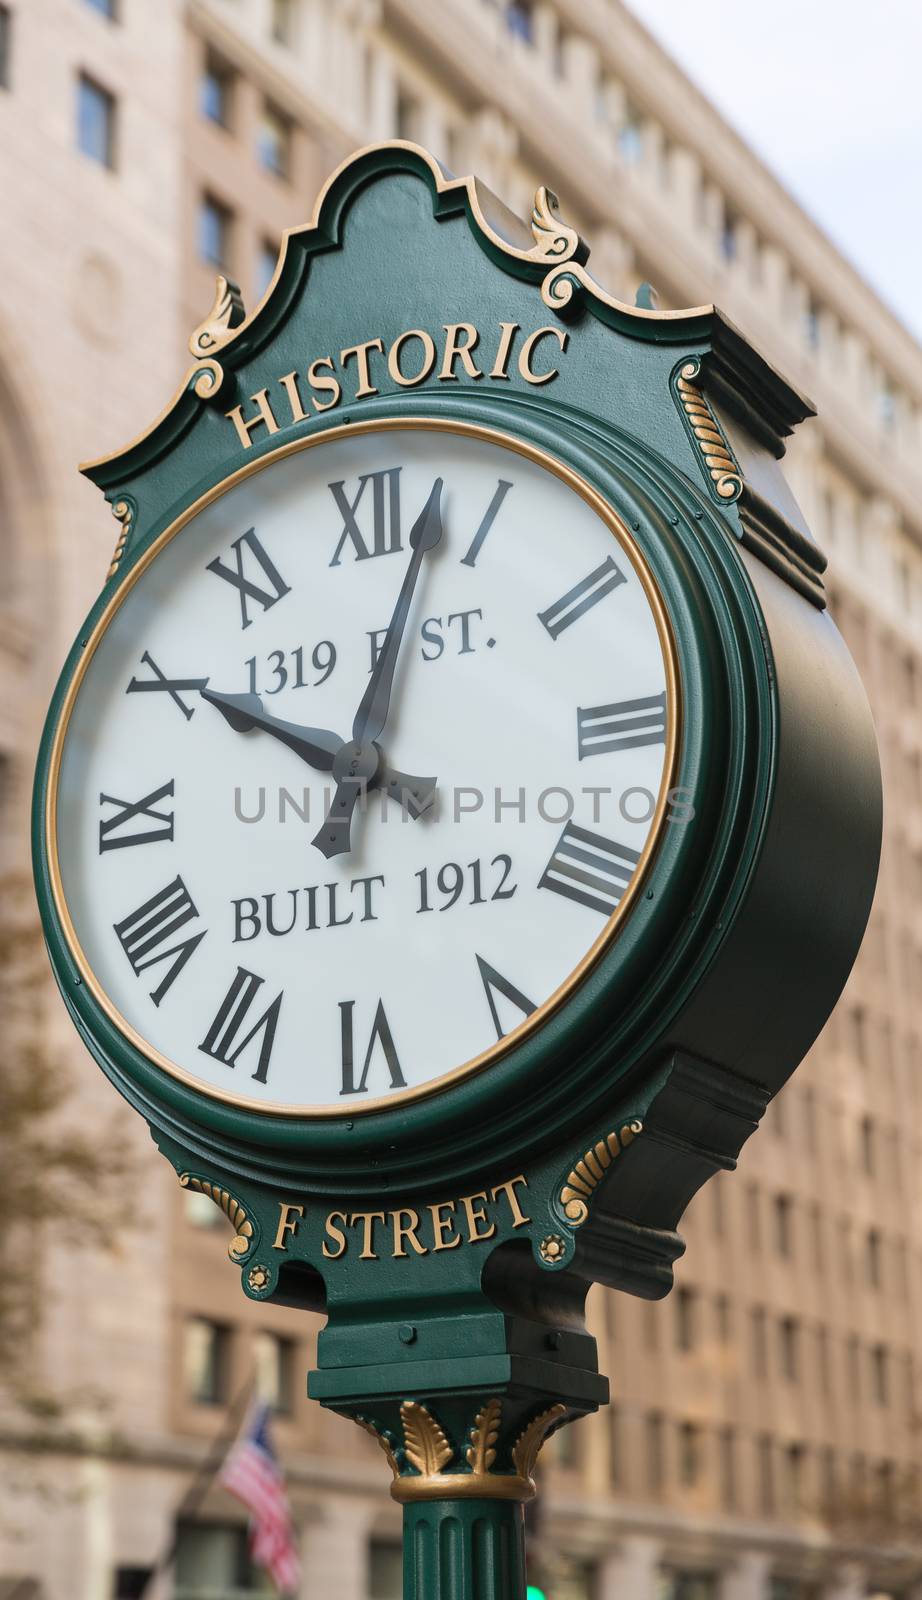 Historic F Street Clock in Washington DC by chrisukphoto